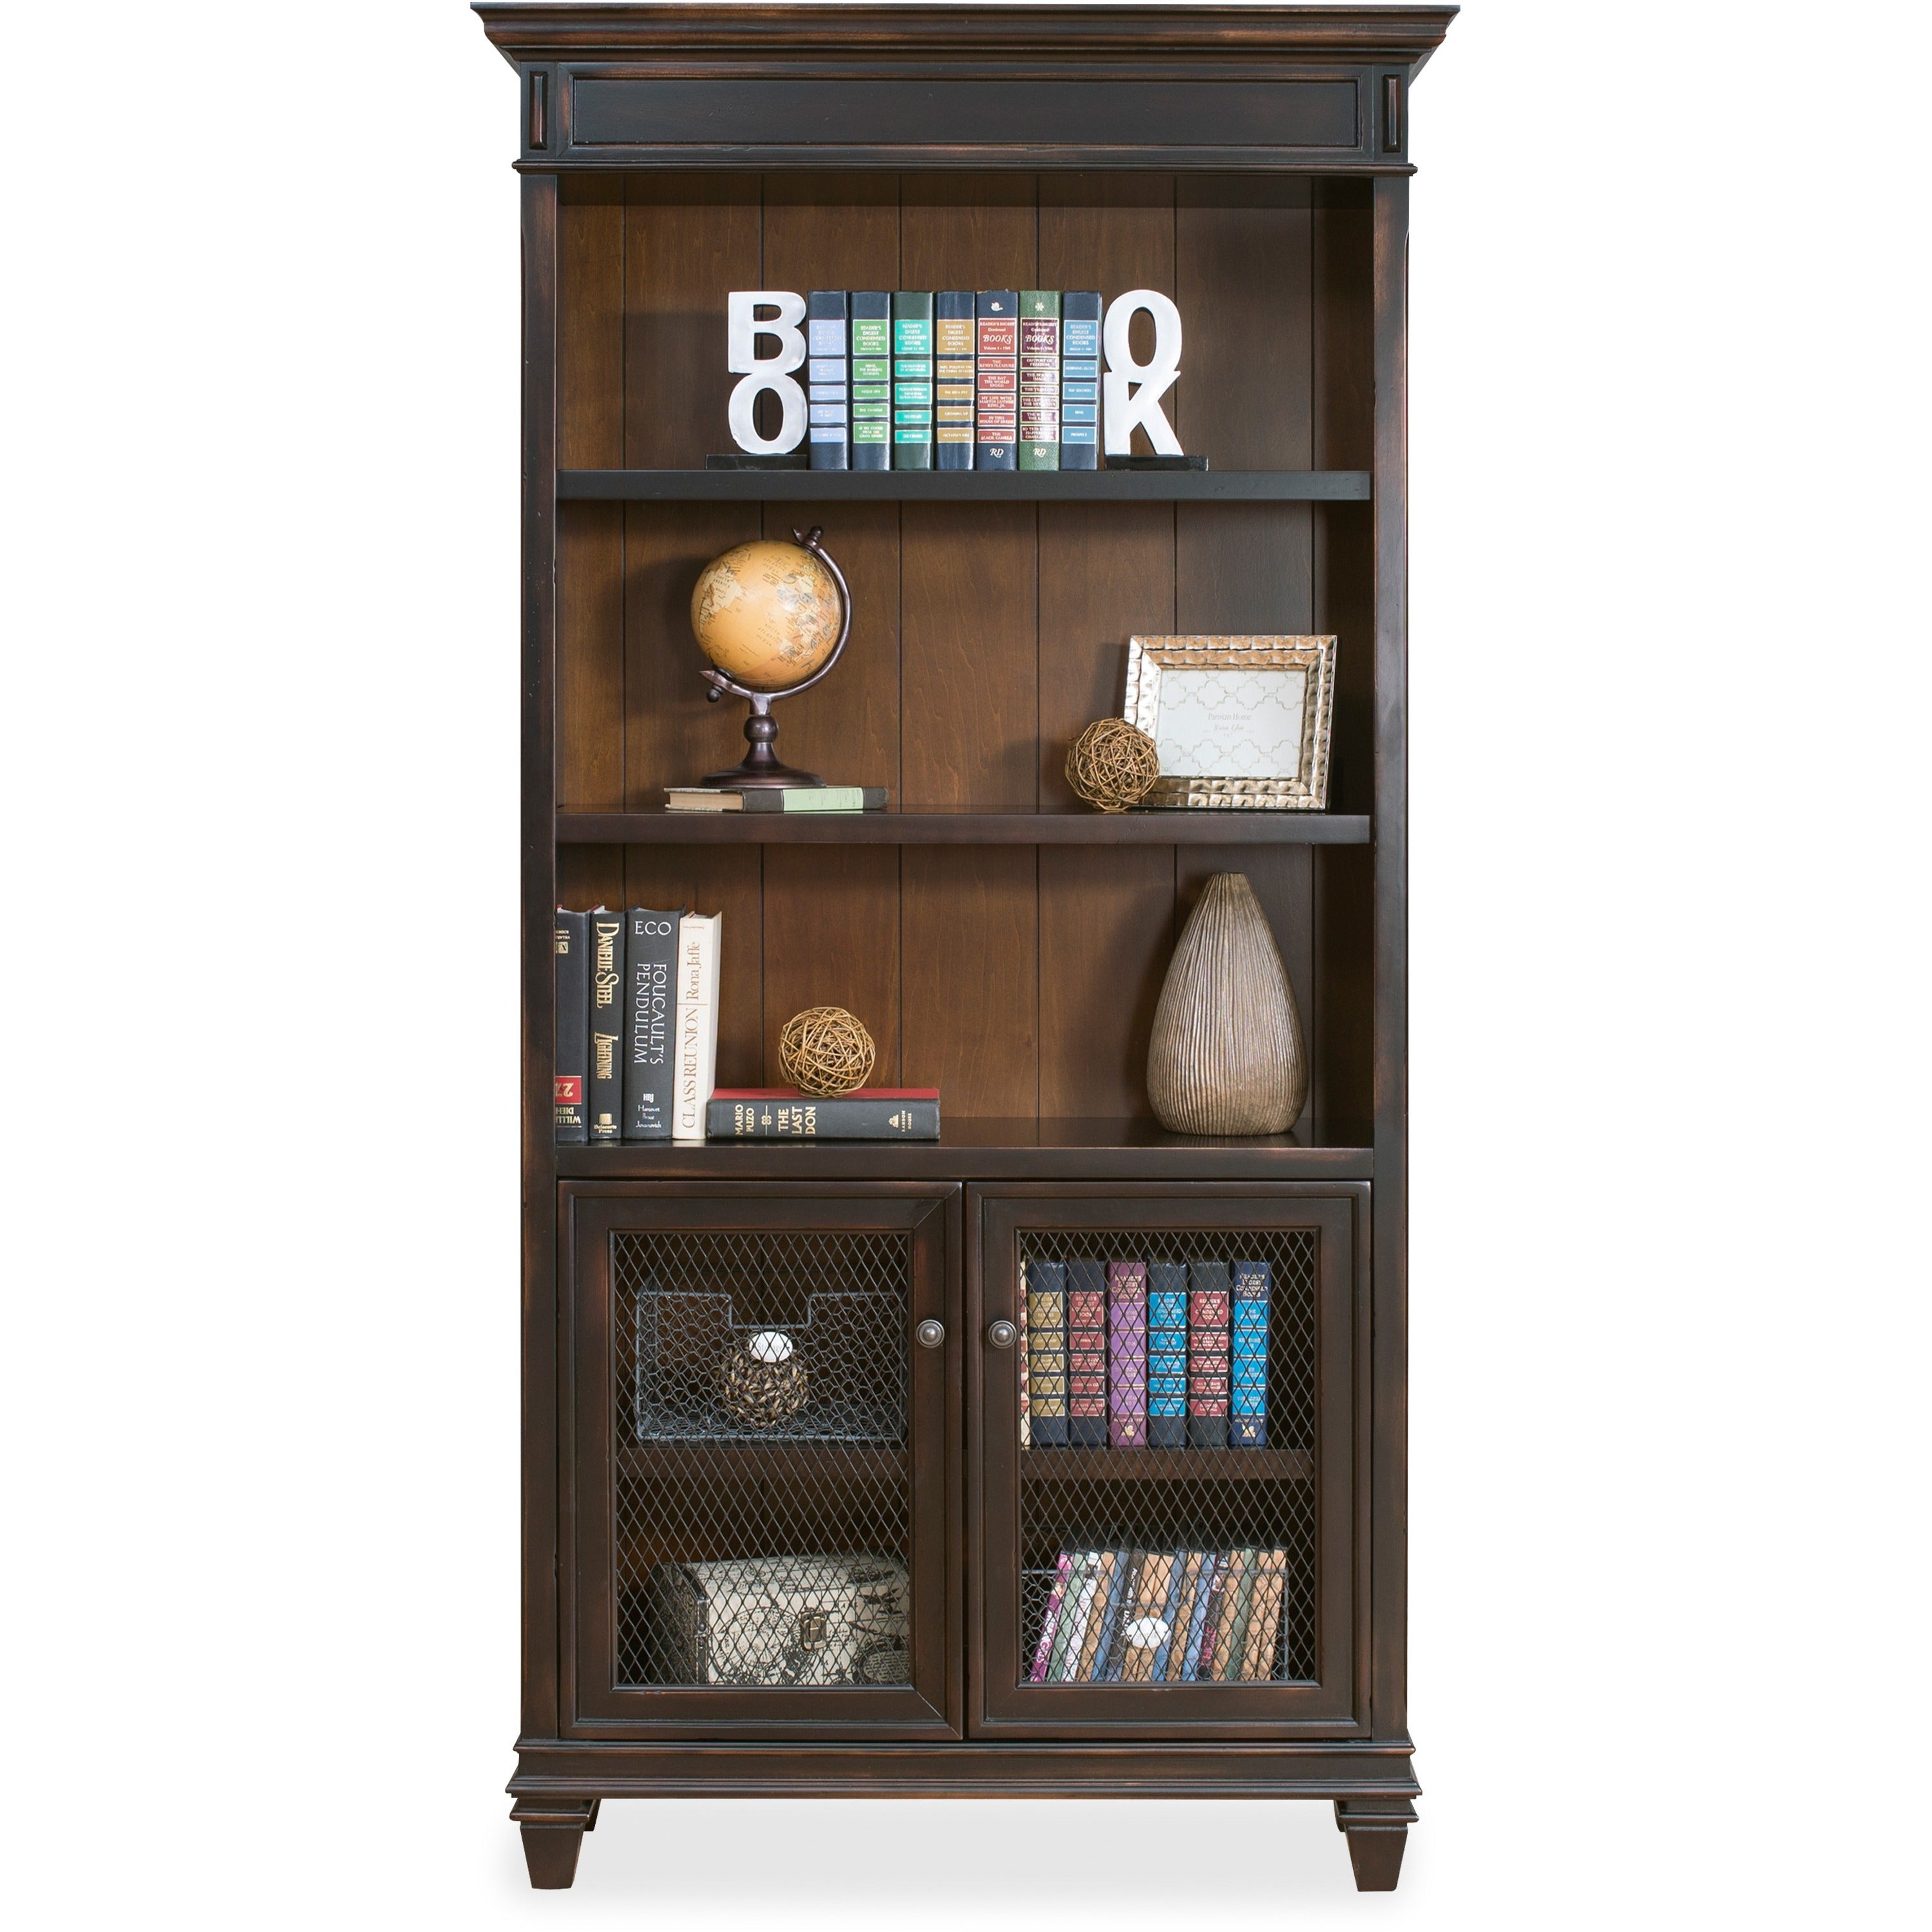 martin-hartford-bookcase-with-lower-doors-40-x-1478-2-doors-5-shelves-3-adjustable-shelfves-material-wood-veneer-finish-vintage-black-for-book-home-office-living-area_mrtimhf4078d - 1